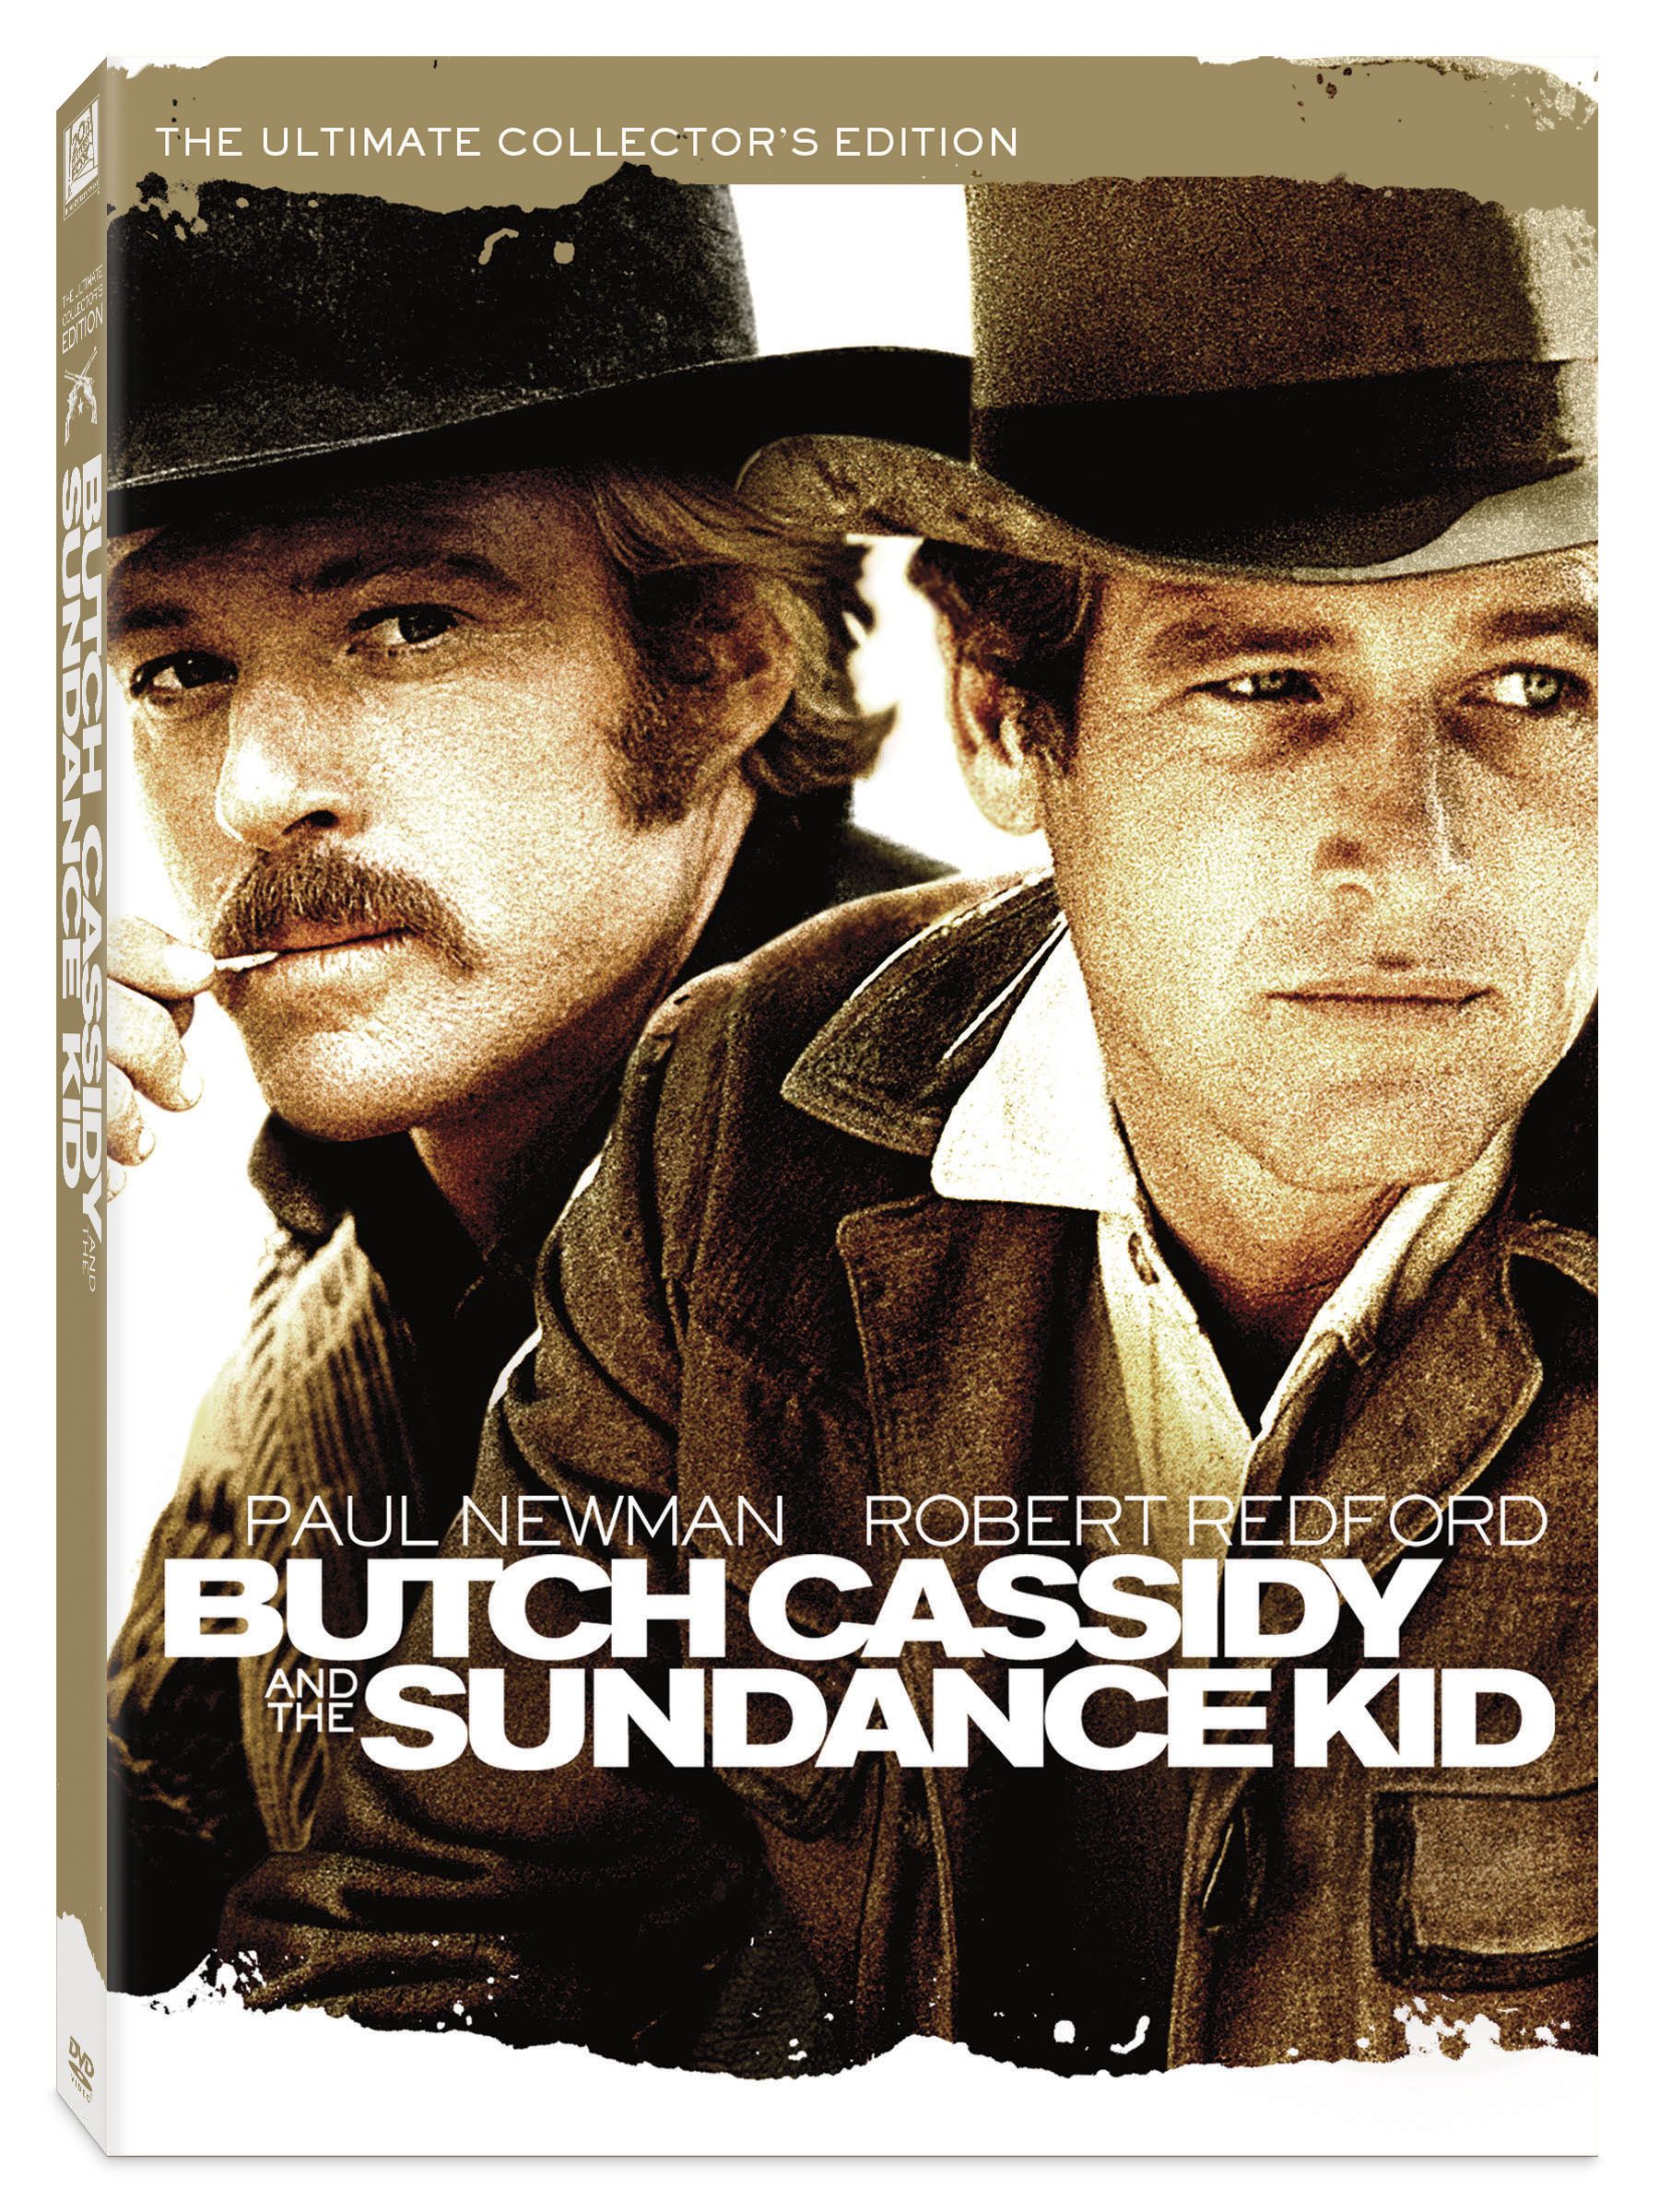 486x755px Butch Cassidy And The Sundance Kid 98.73 KB #200148